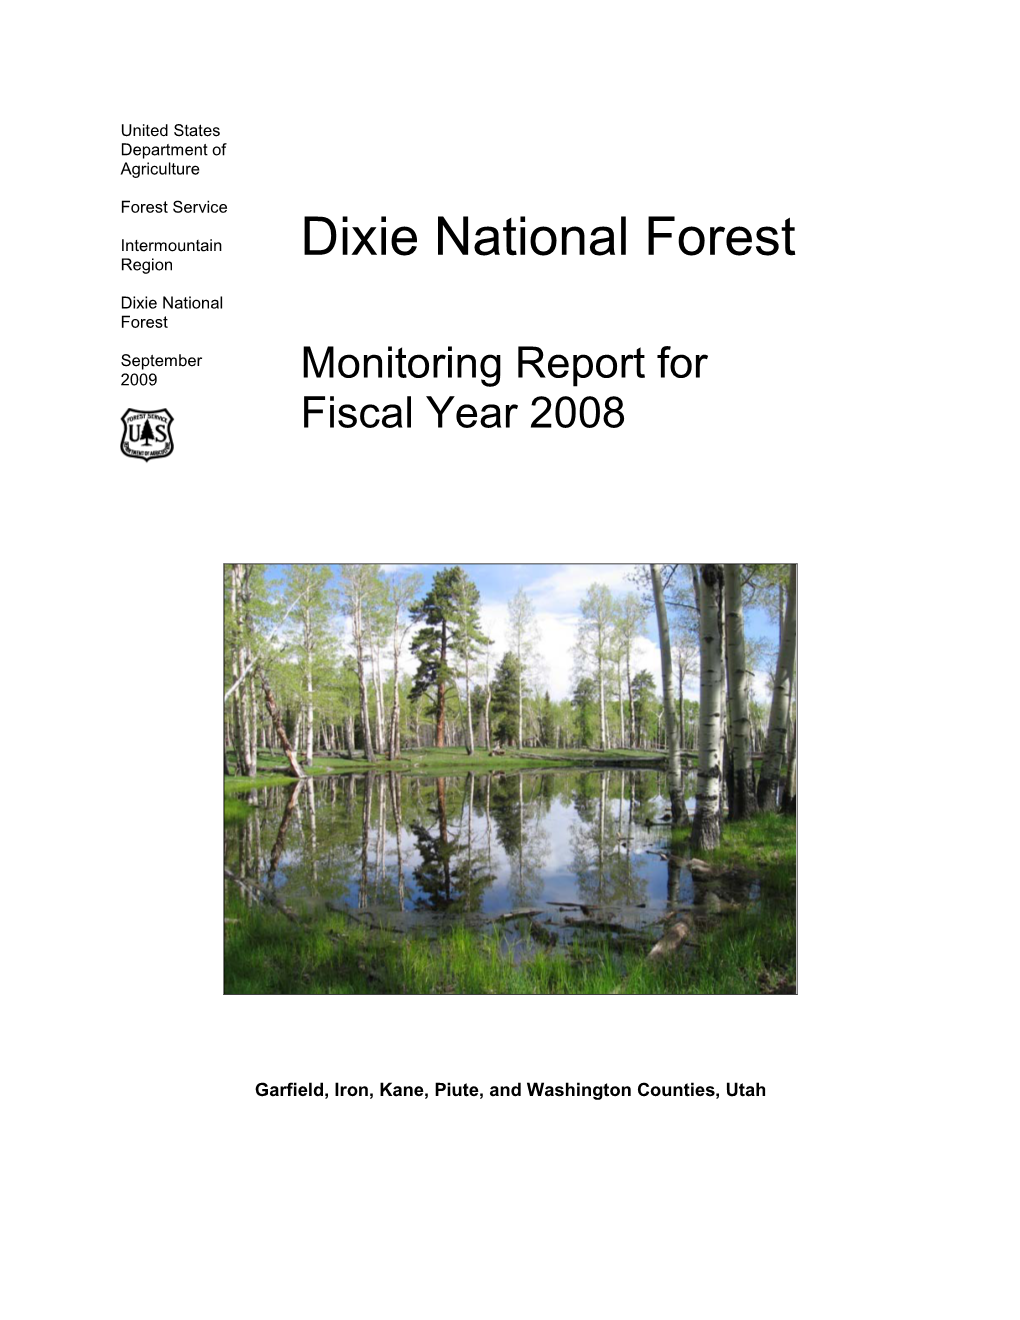 2008 Monitoring Report